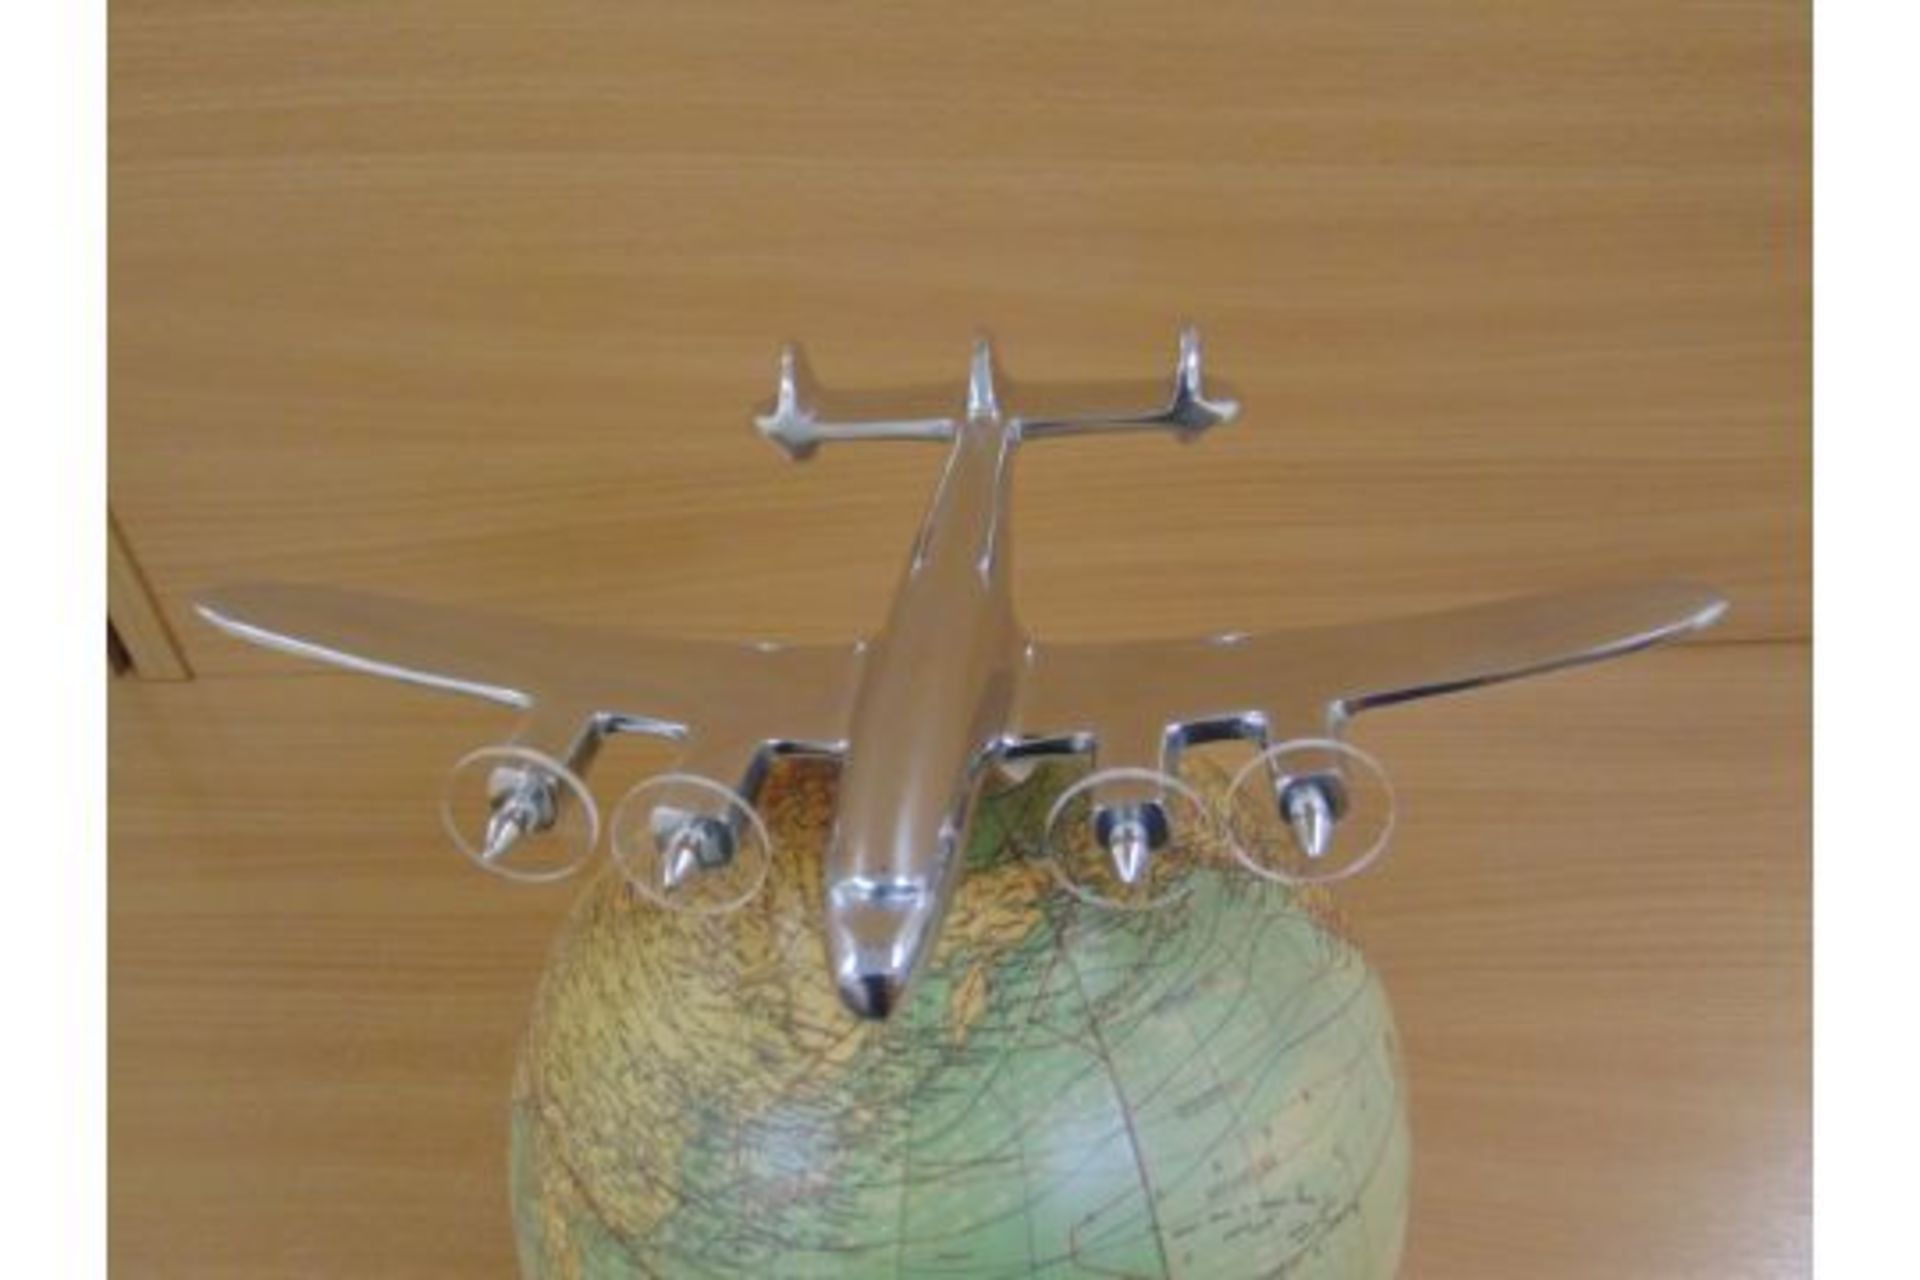 Beautiful Model of Polished Aluminium 4 Engine Aircraft Mounted on top of High Quality Globe - Image 6 of 10